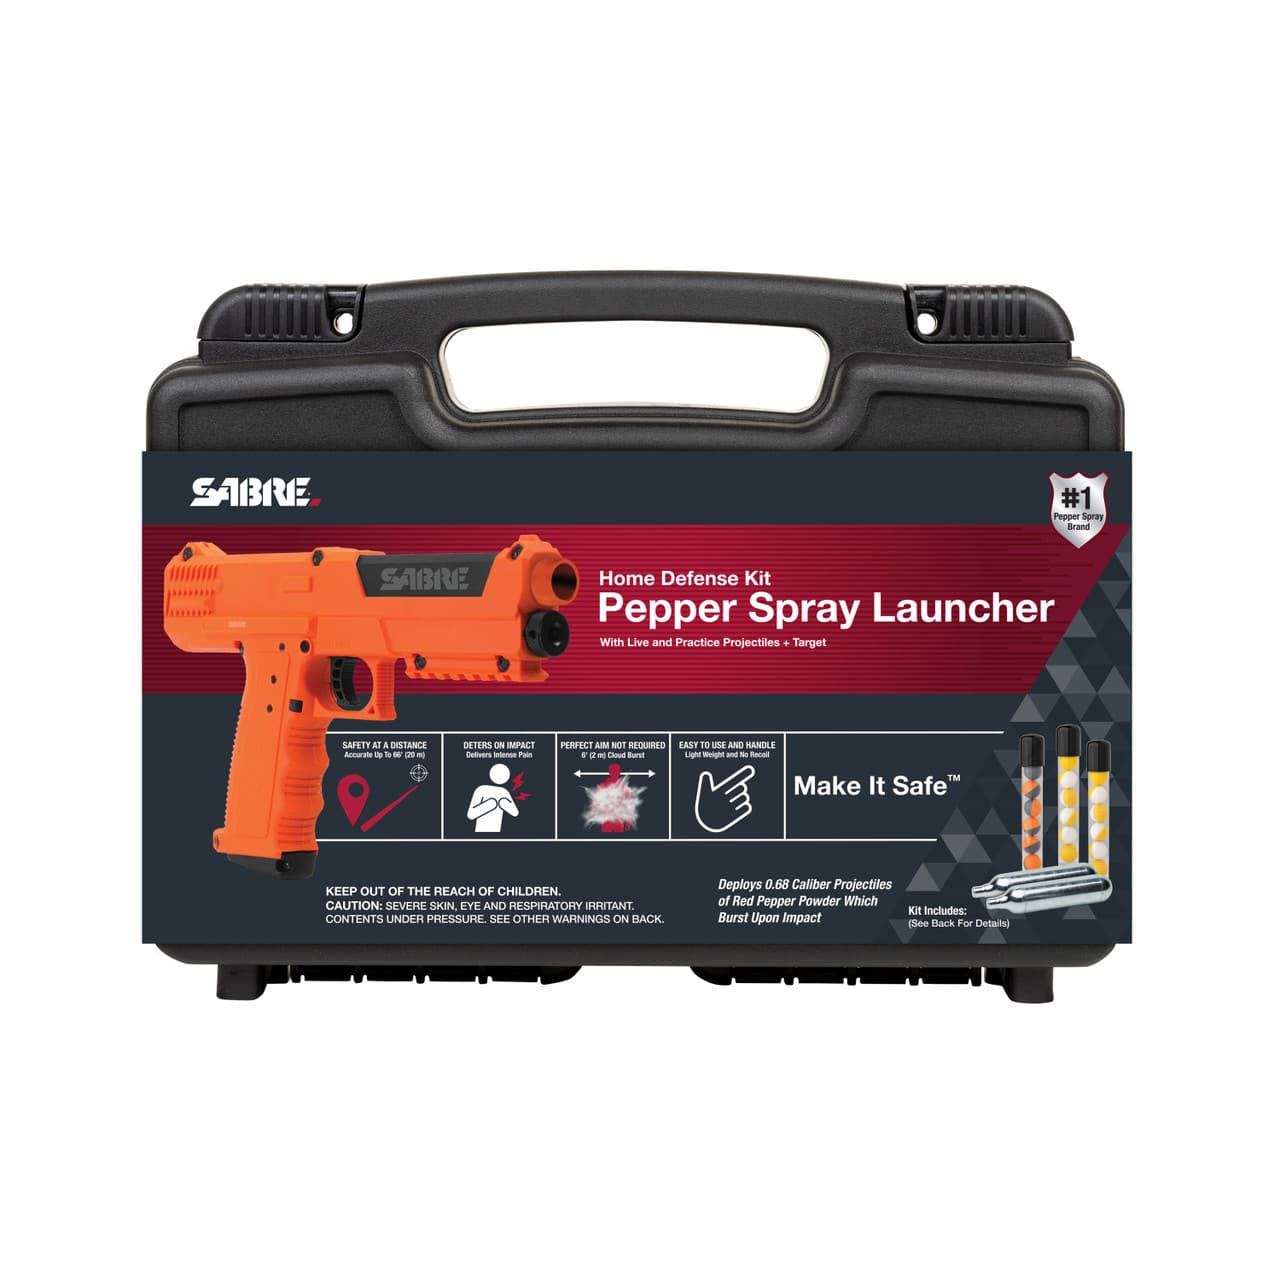 Pepper Spray Gun in Carry Box